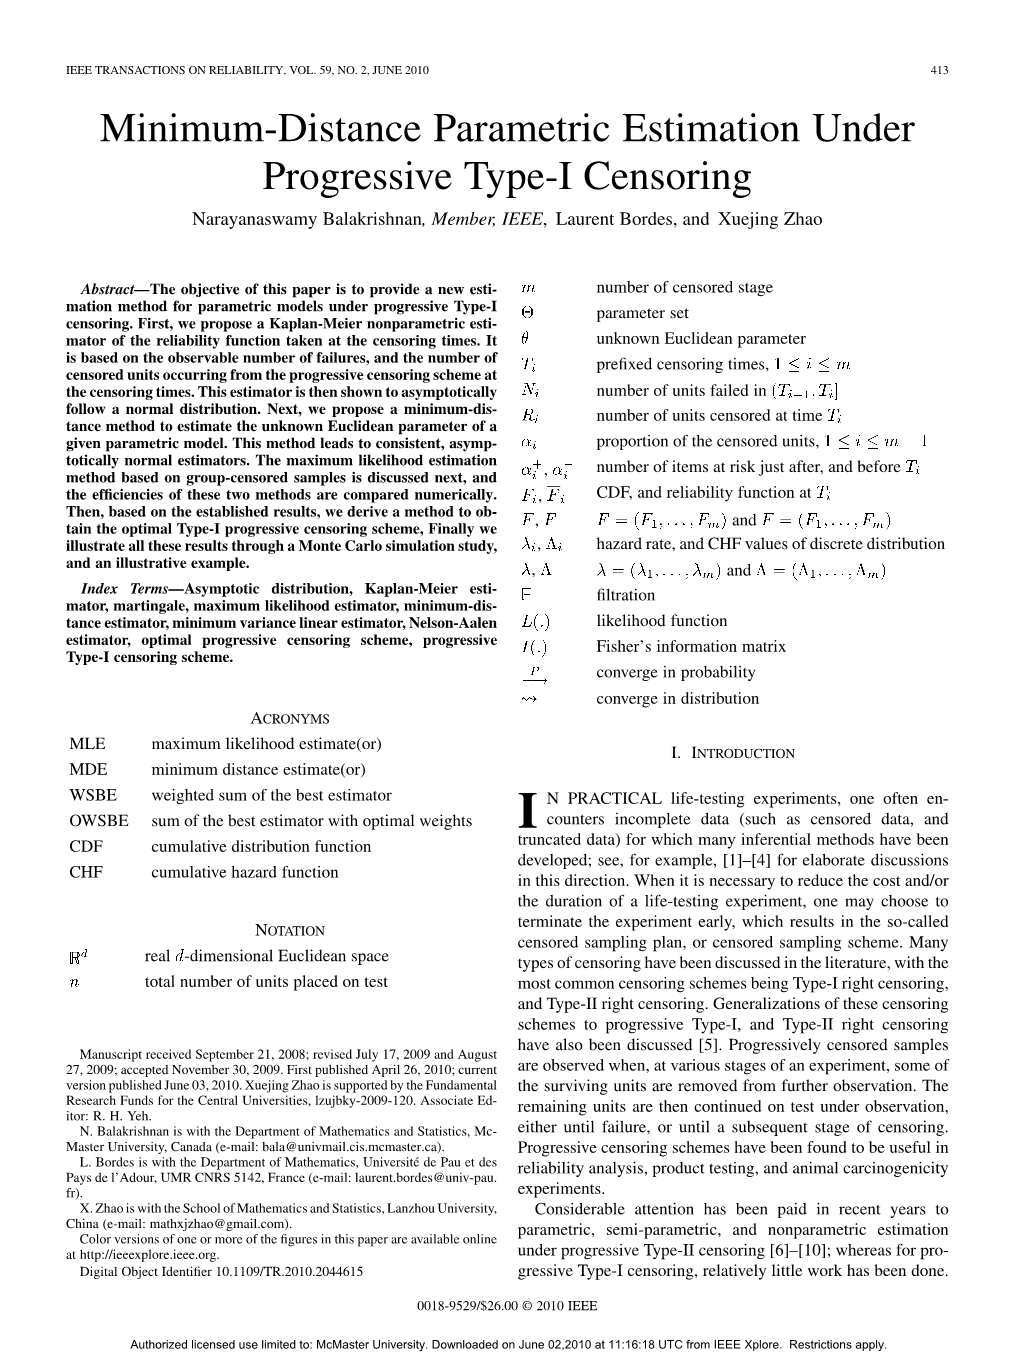 Minimum-Distance Parametric Estimation Under Progressive Type-I Censoring Narayanaswamy Balakrishnan, Member, IEEE, Laurent Bordes, and Xuejing Zhao